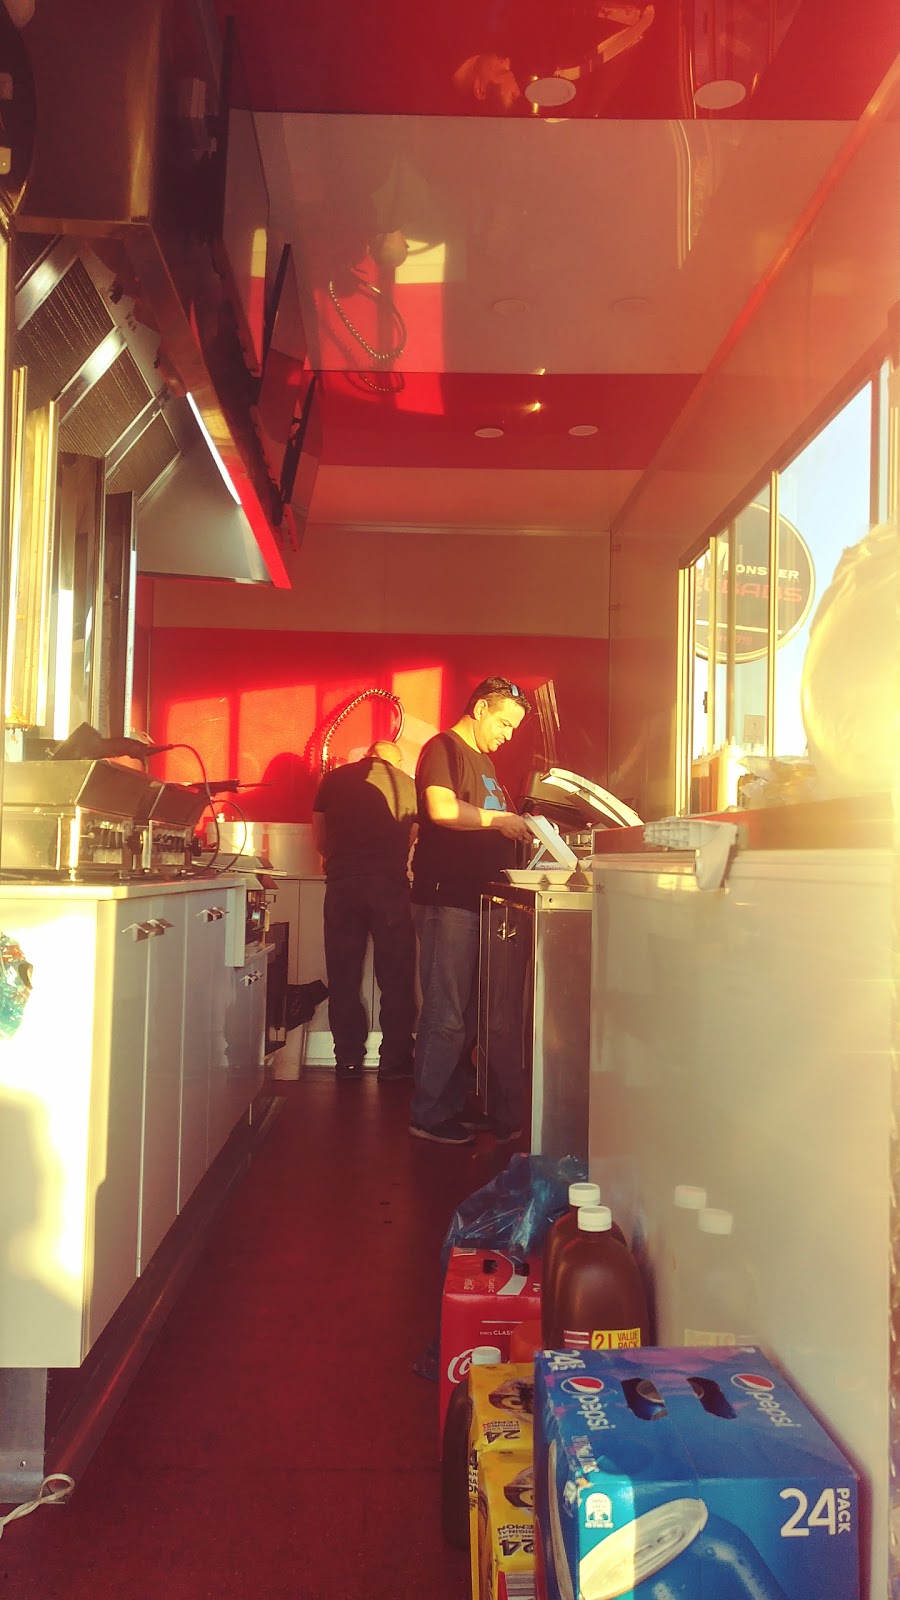 Monster Kebab Endeavour Hills | restaurant | 13/17 Heatherton Rd, Endeavour Hills VIC 3802, Australia | 0450997057 OR +61 450 997 057